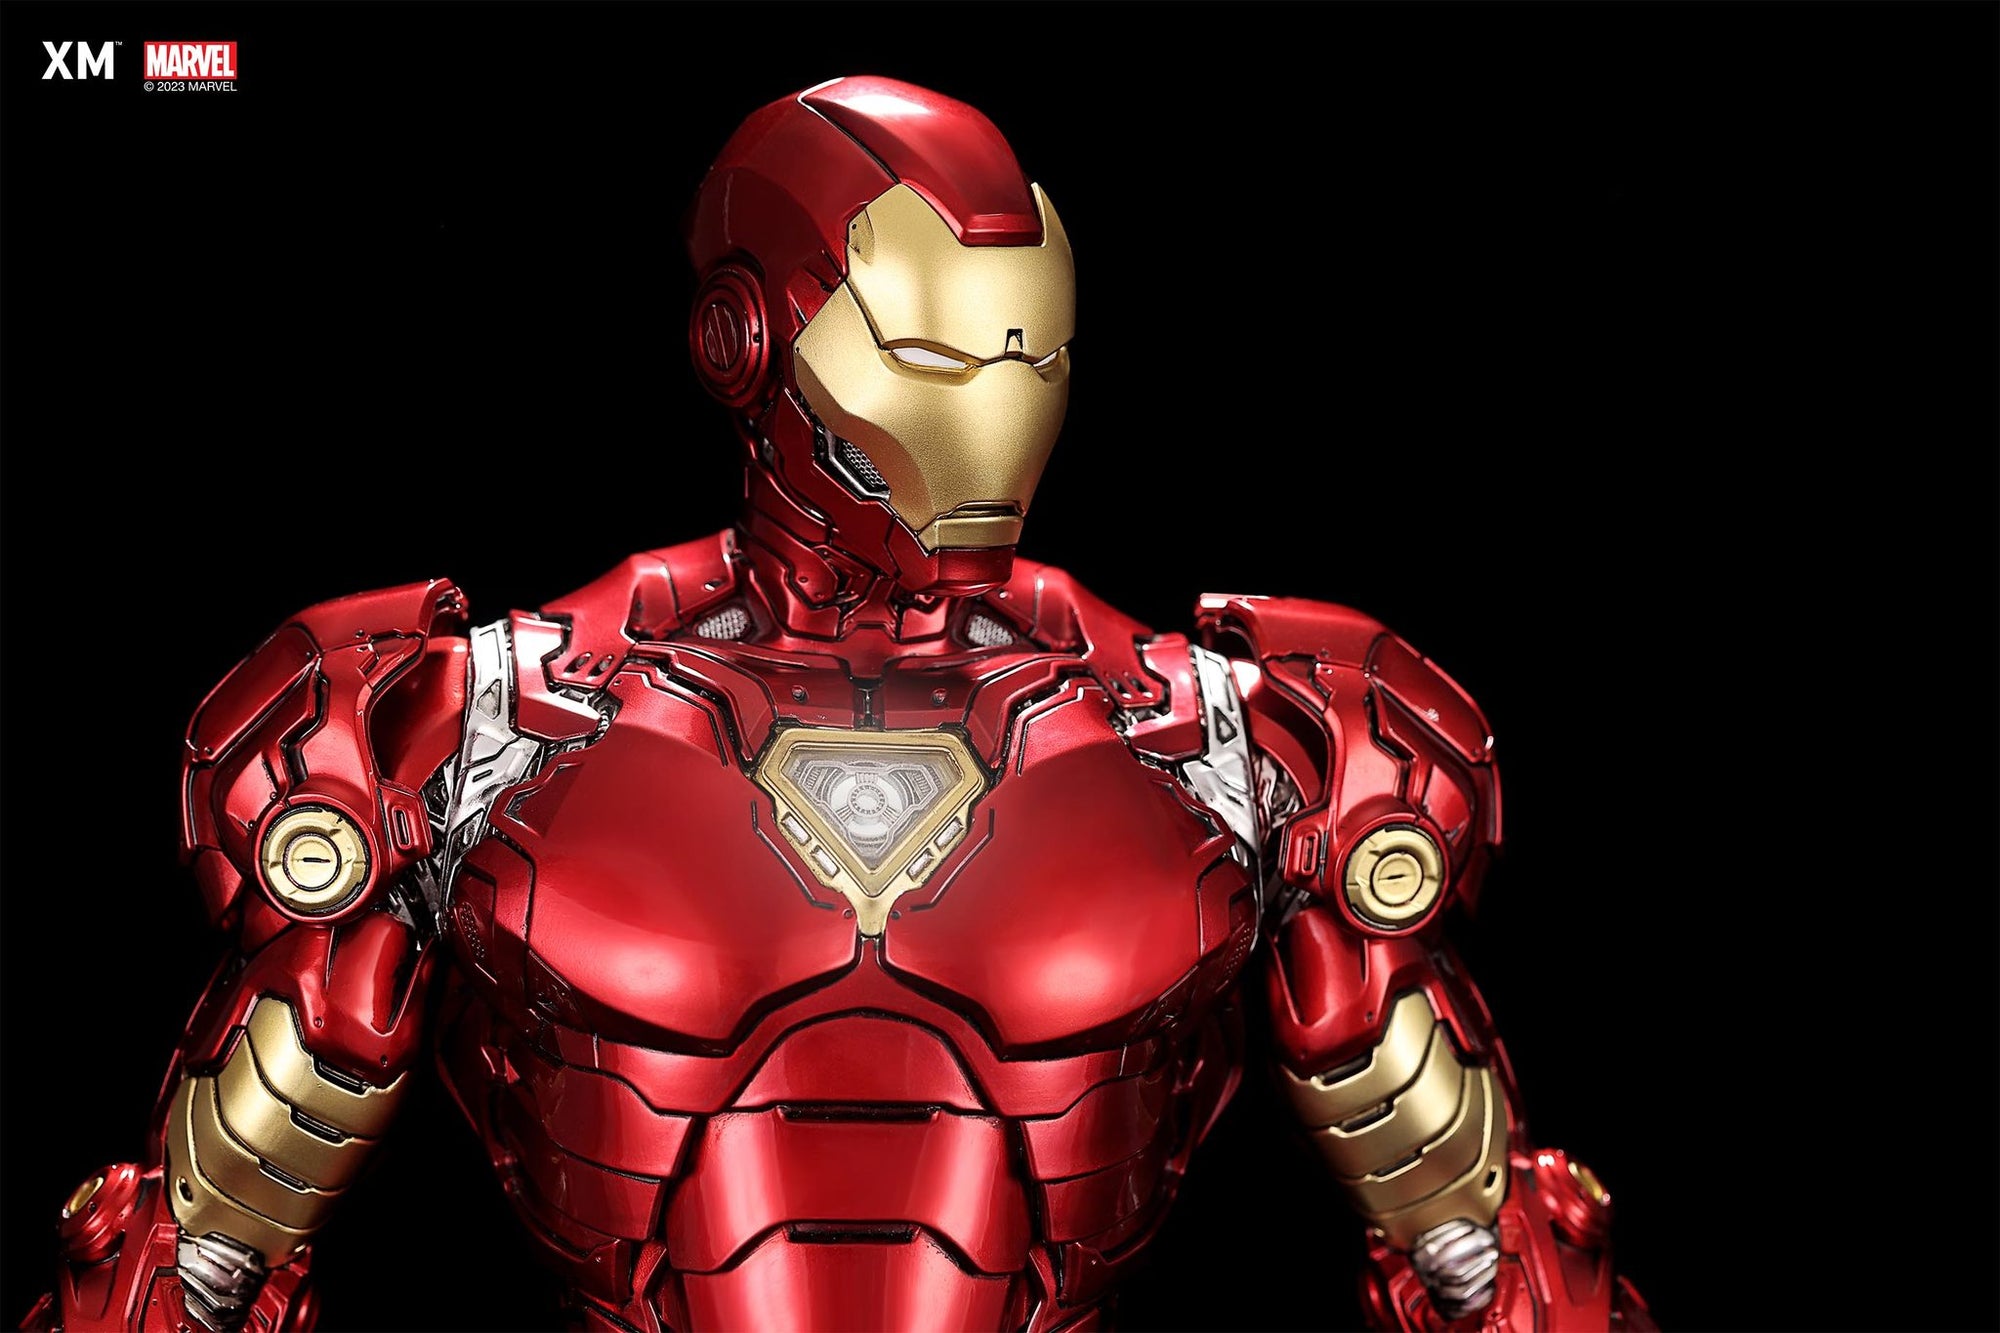 Share 168+ iron man 1 suit latest